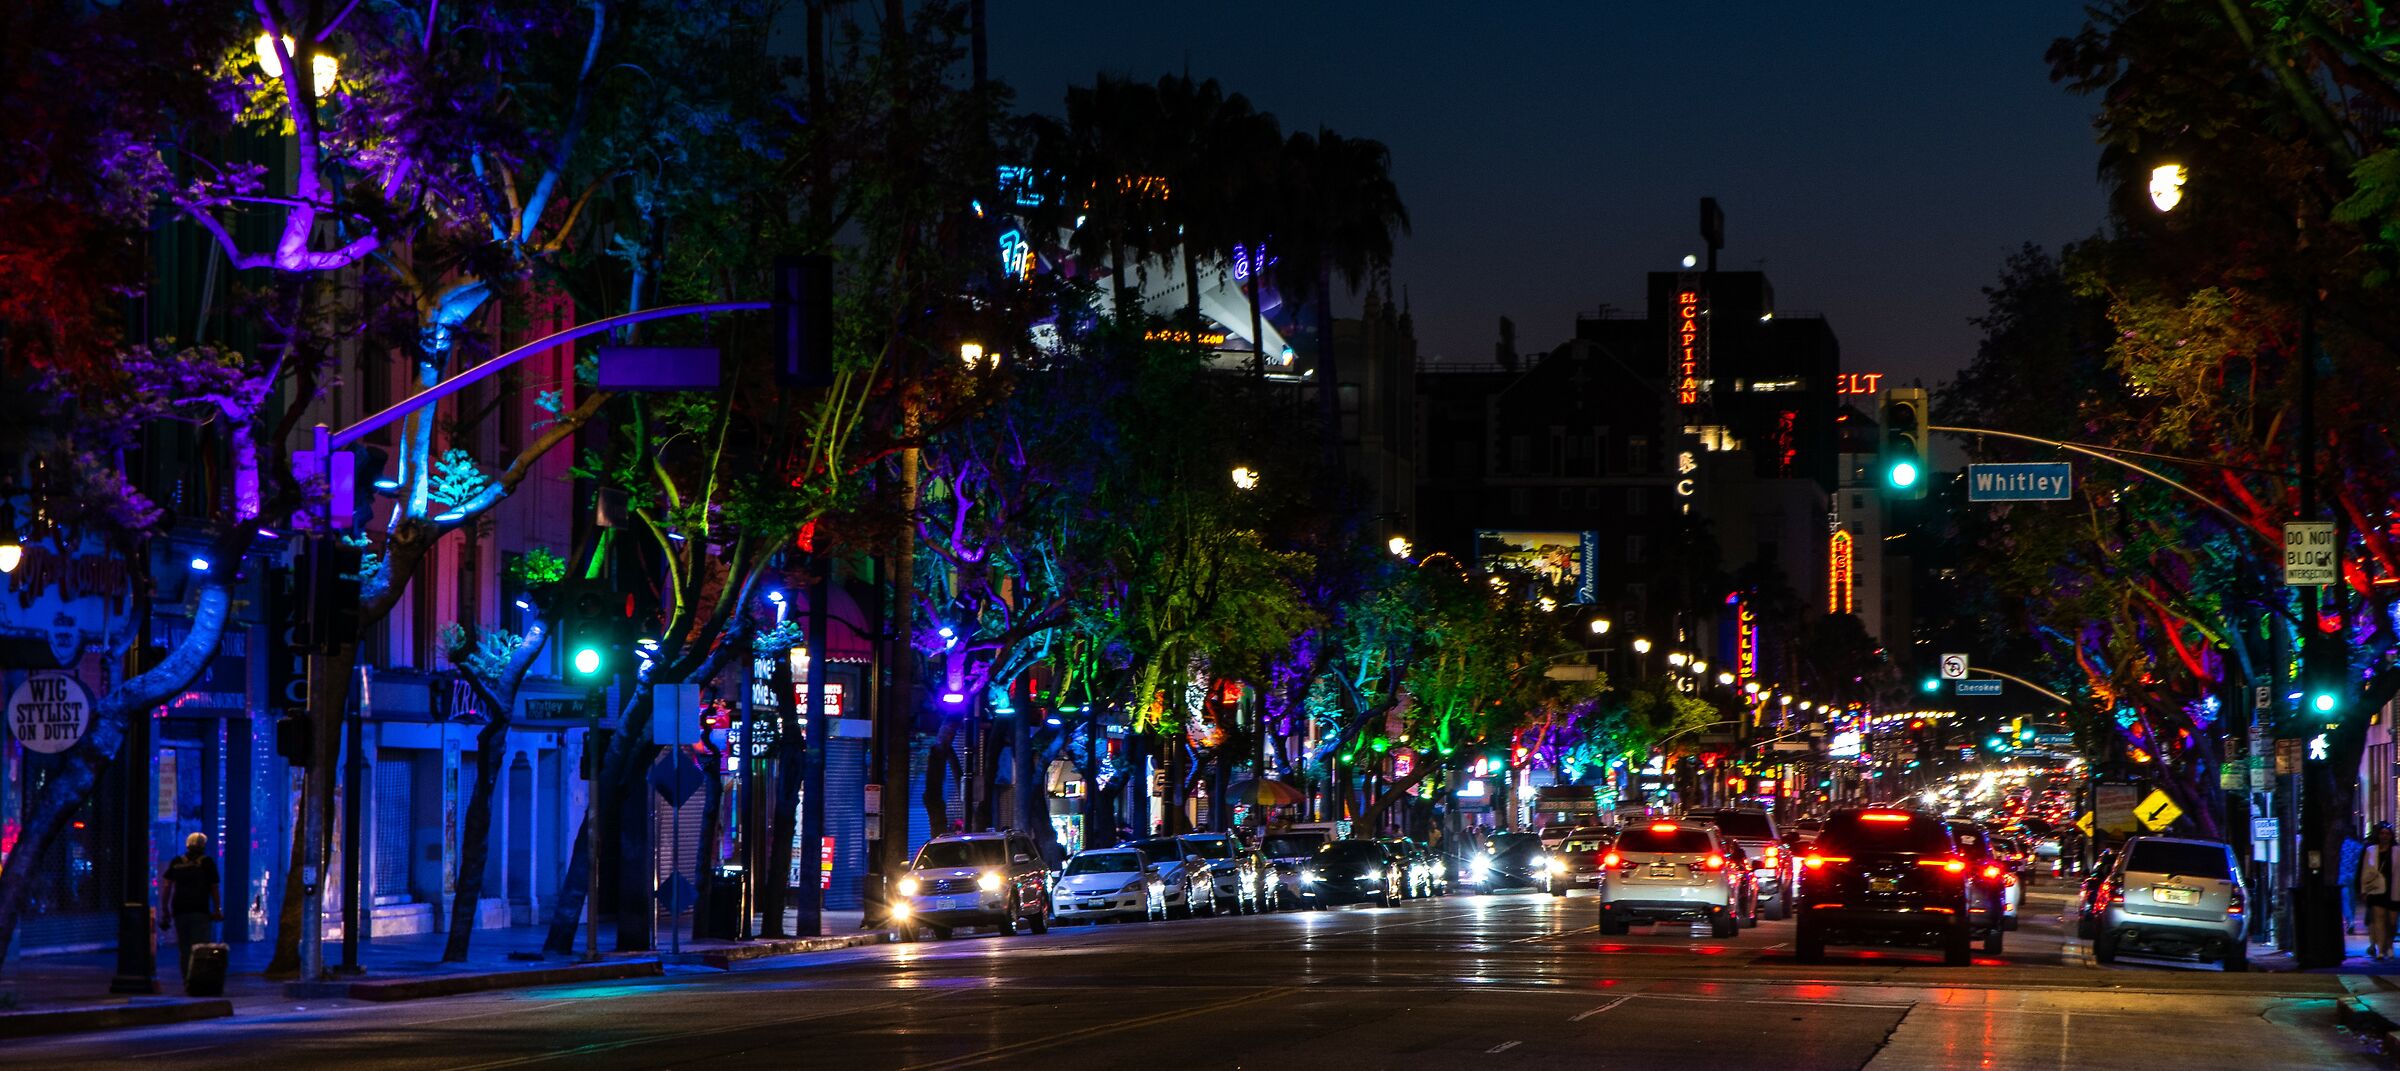 Le luci di Hollywood Boulevard...